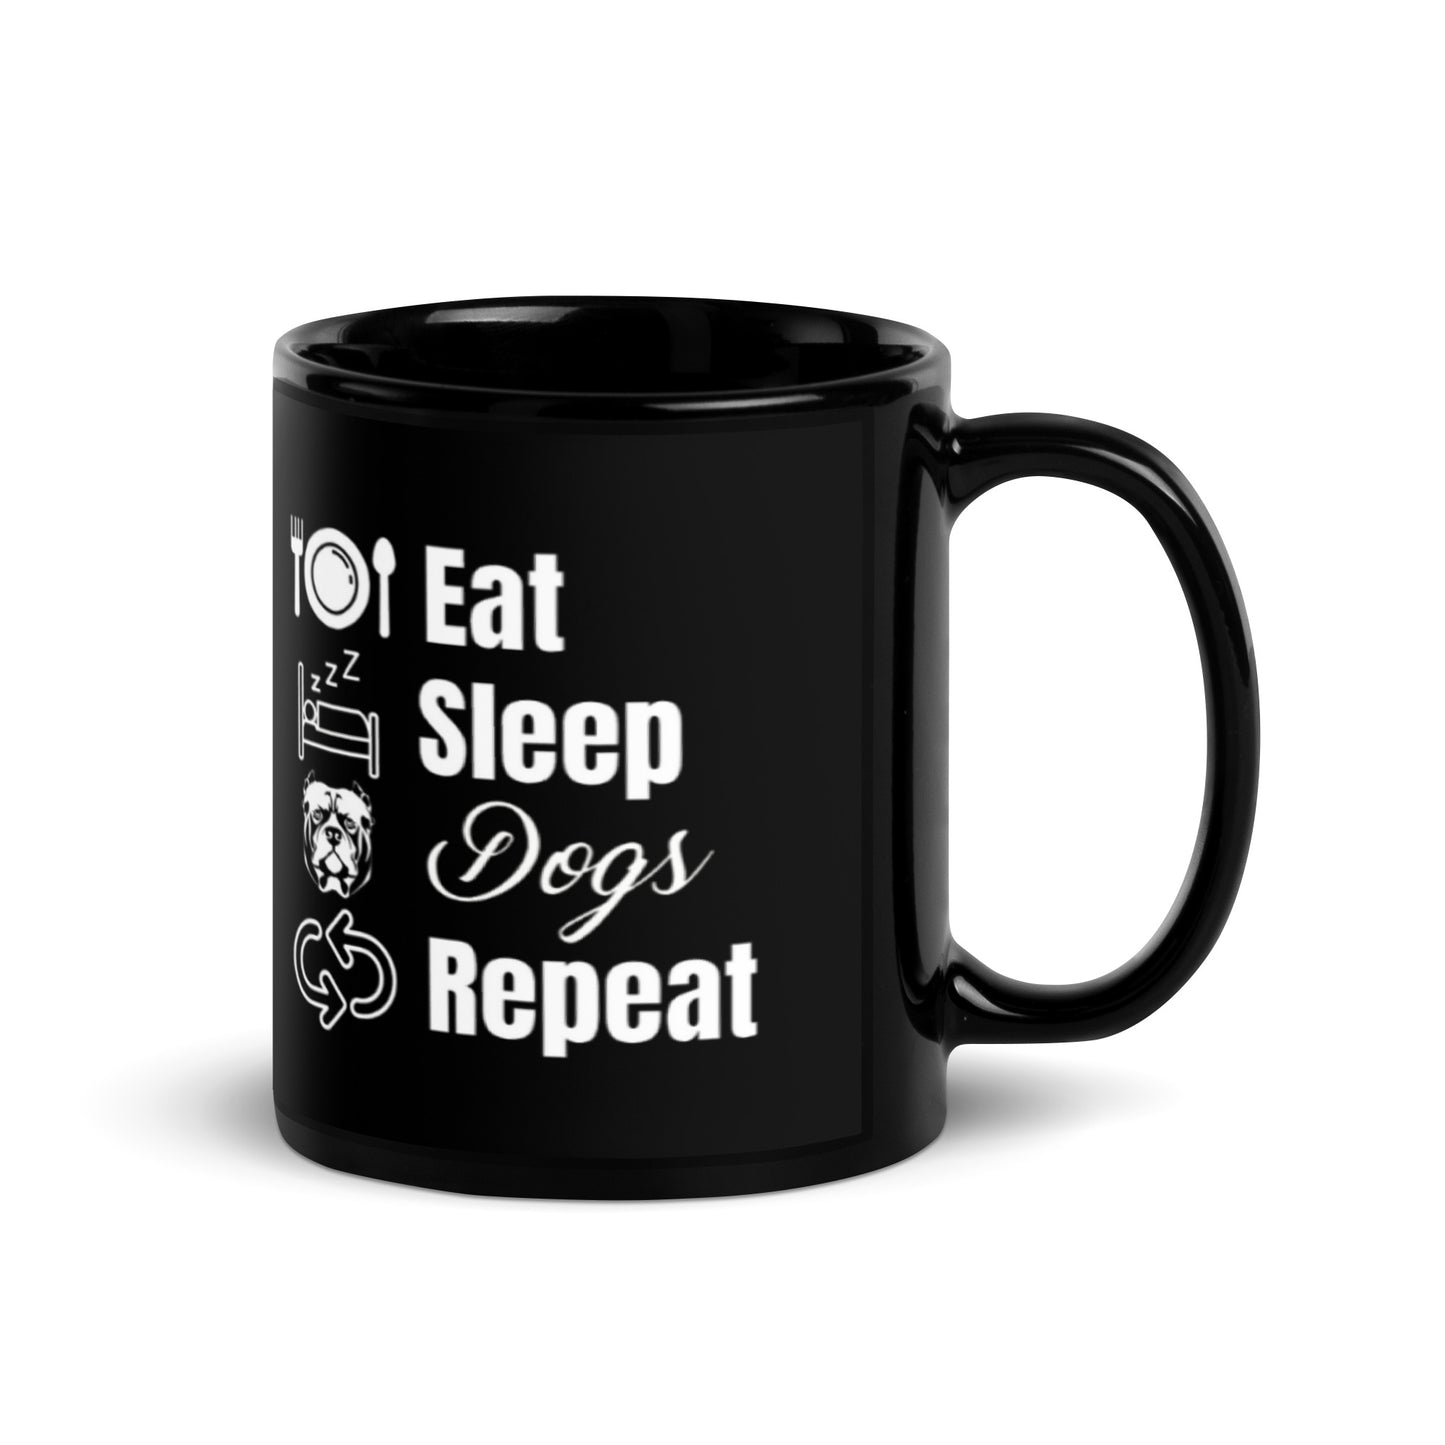 Eat Sleep Dogs Repeat - Black Glossy Mug